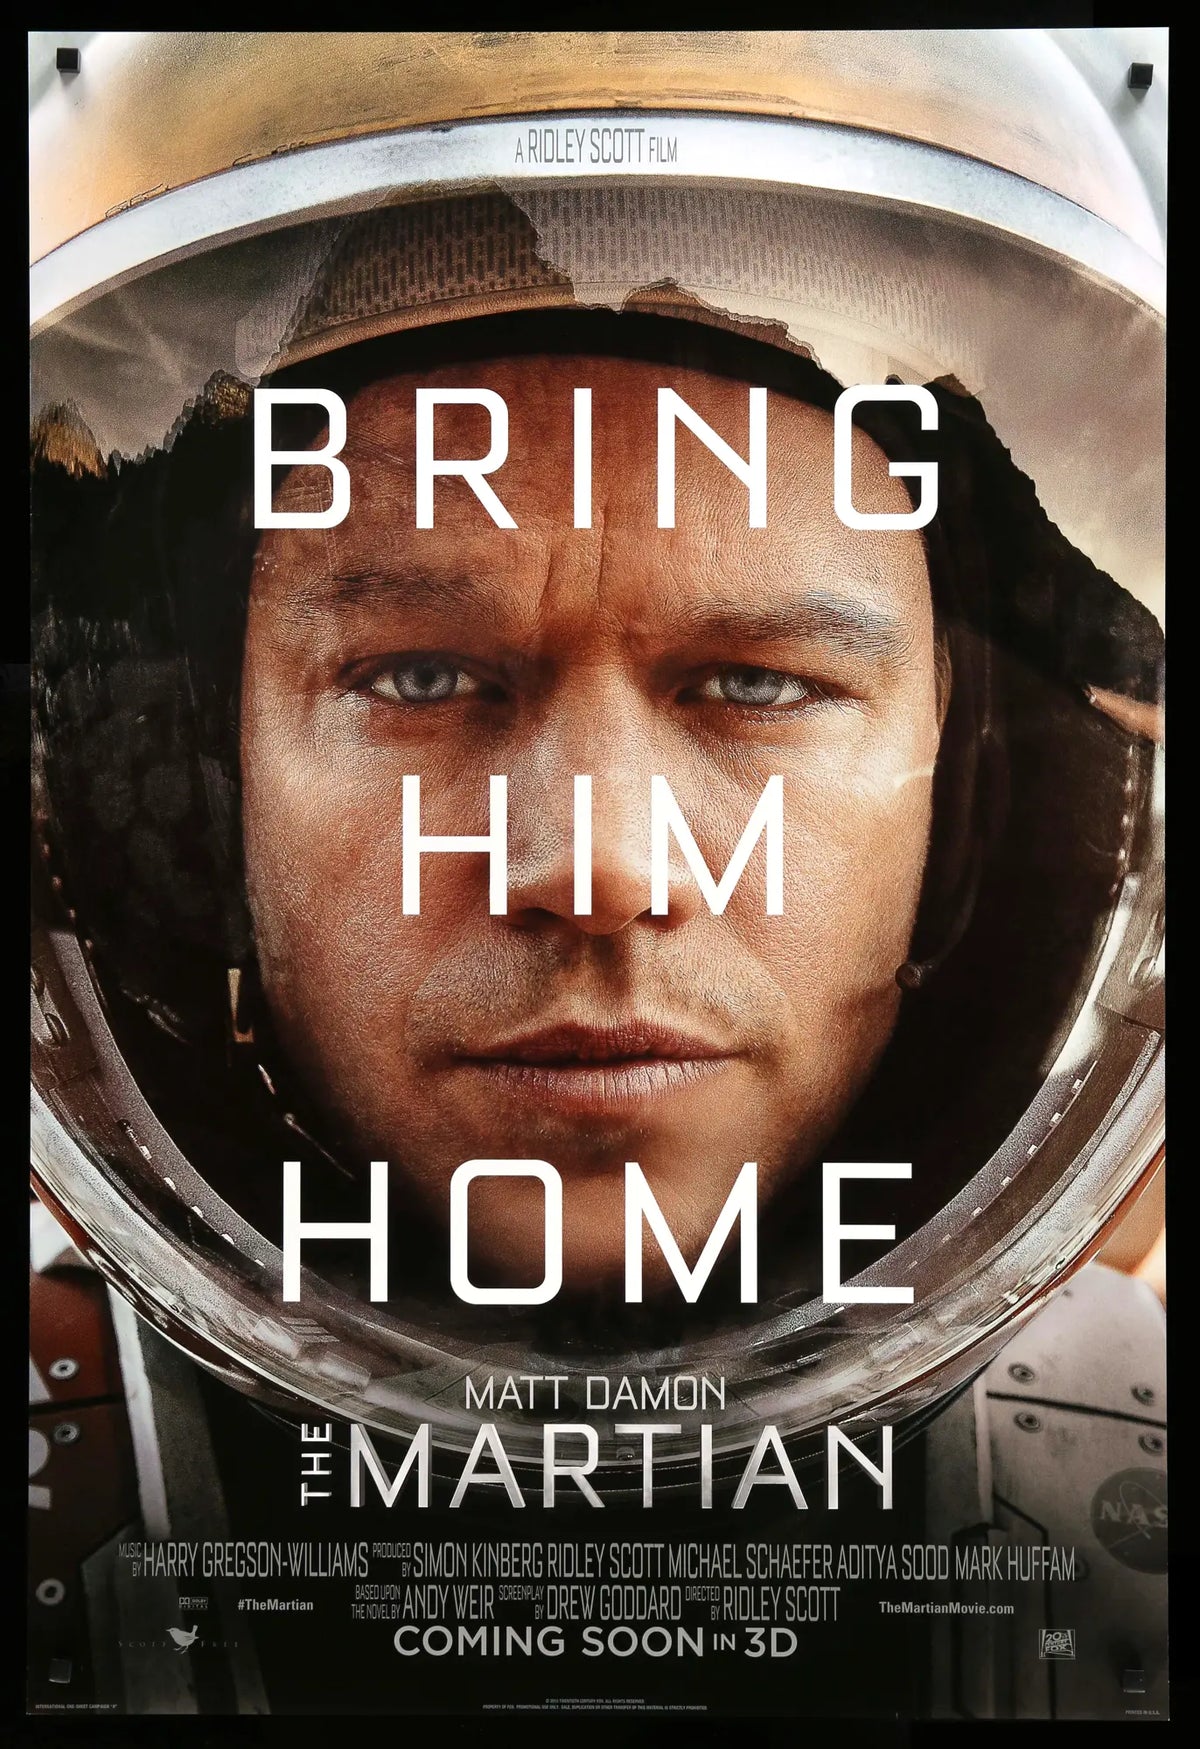 Martian (2015) original movie poster for sale at Original Film Art